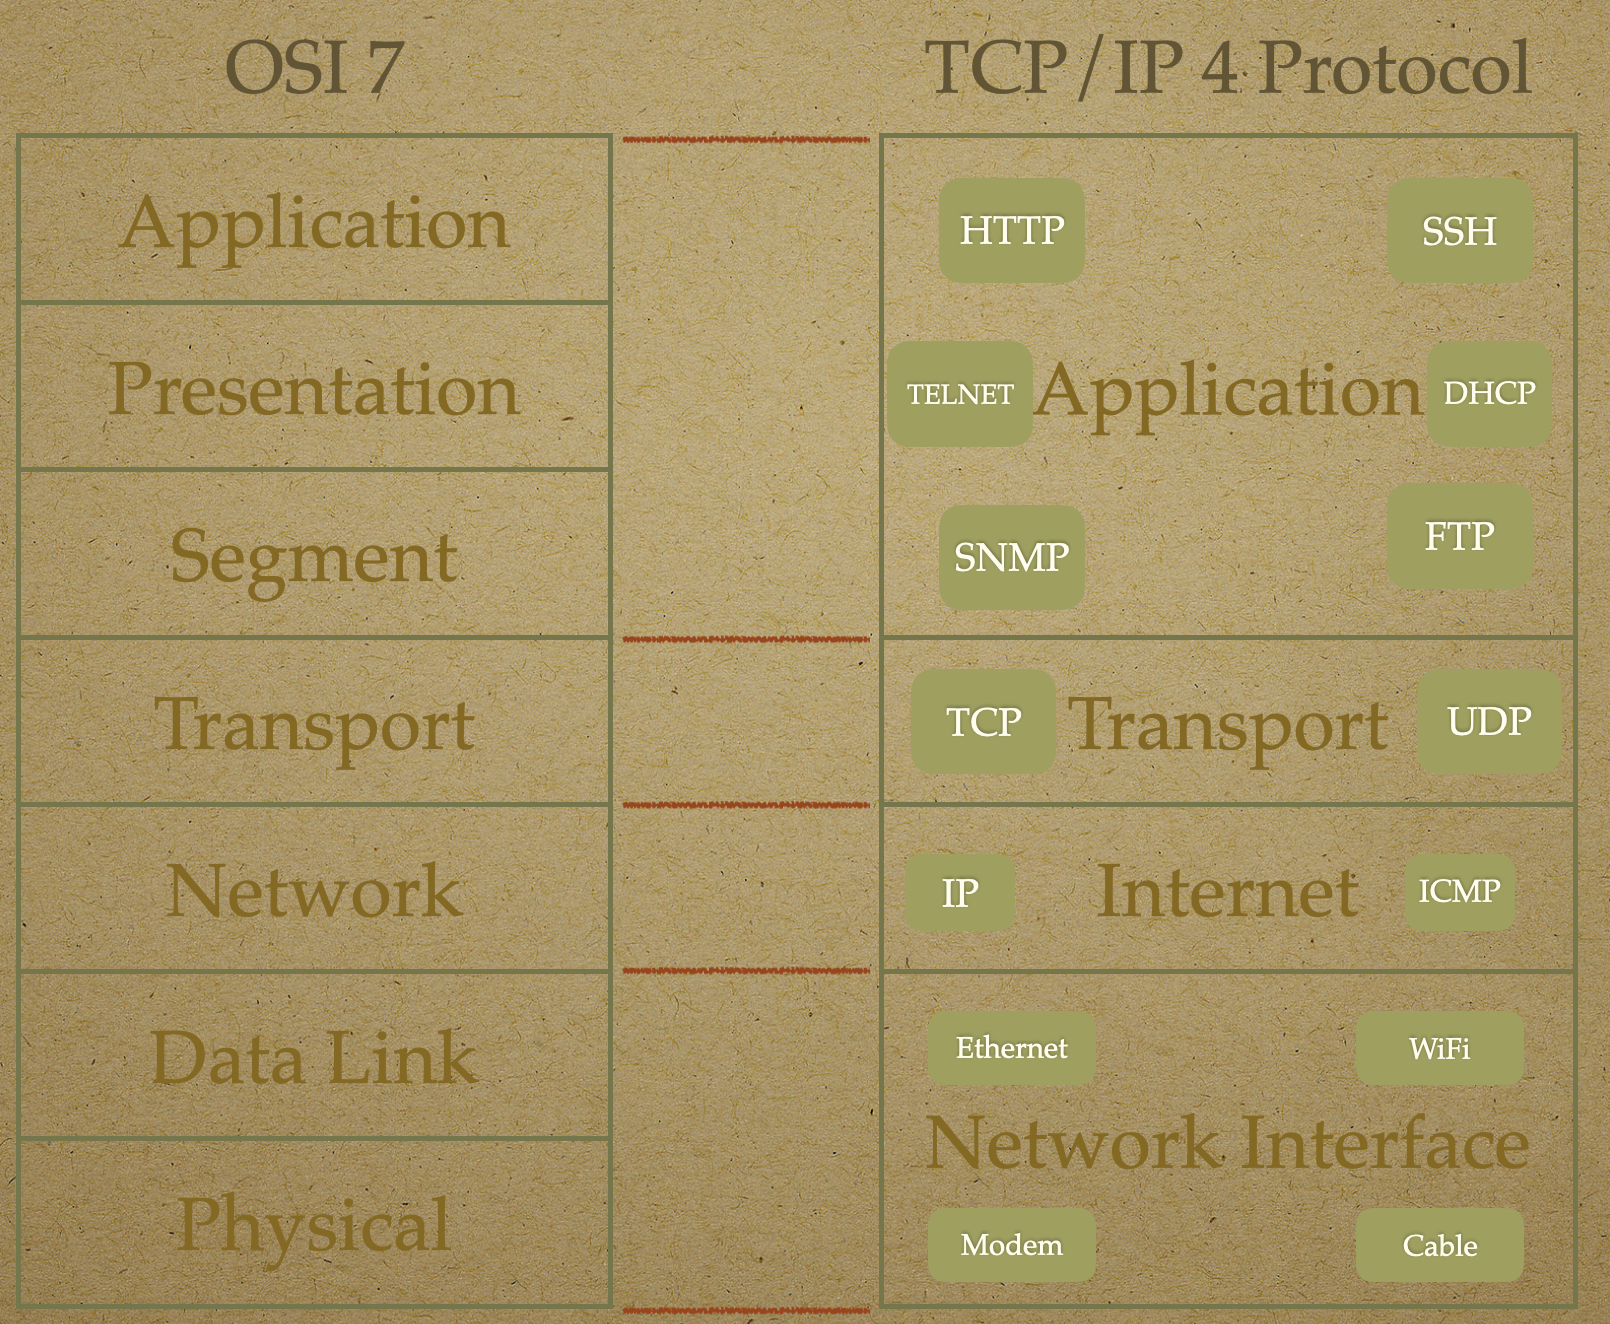 OSI 7 Layer vs TCP/IP Protocol